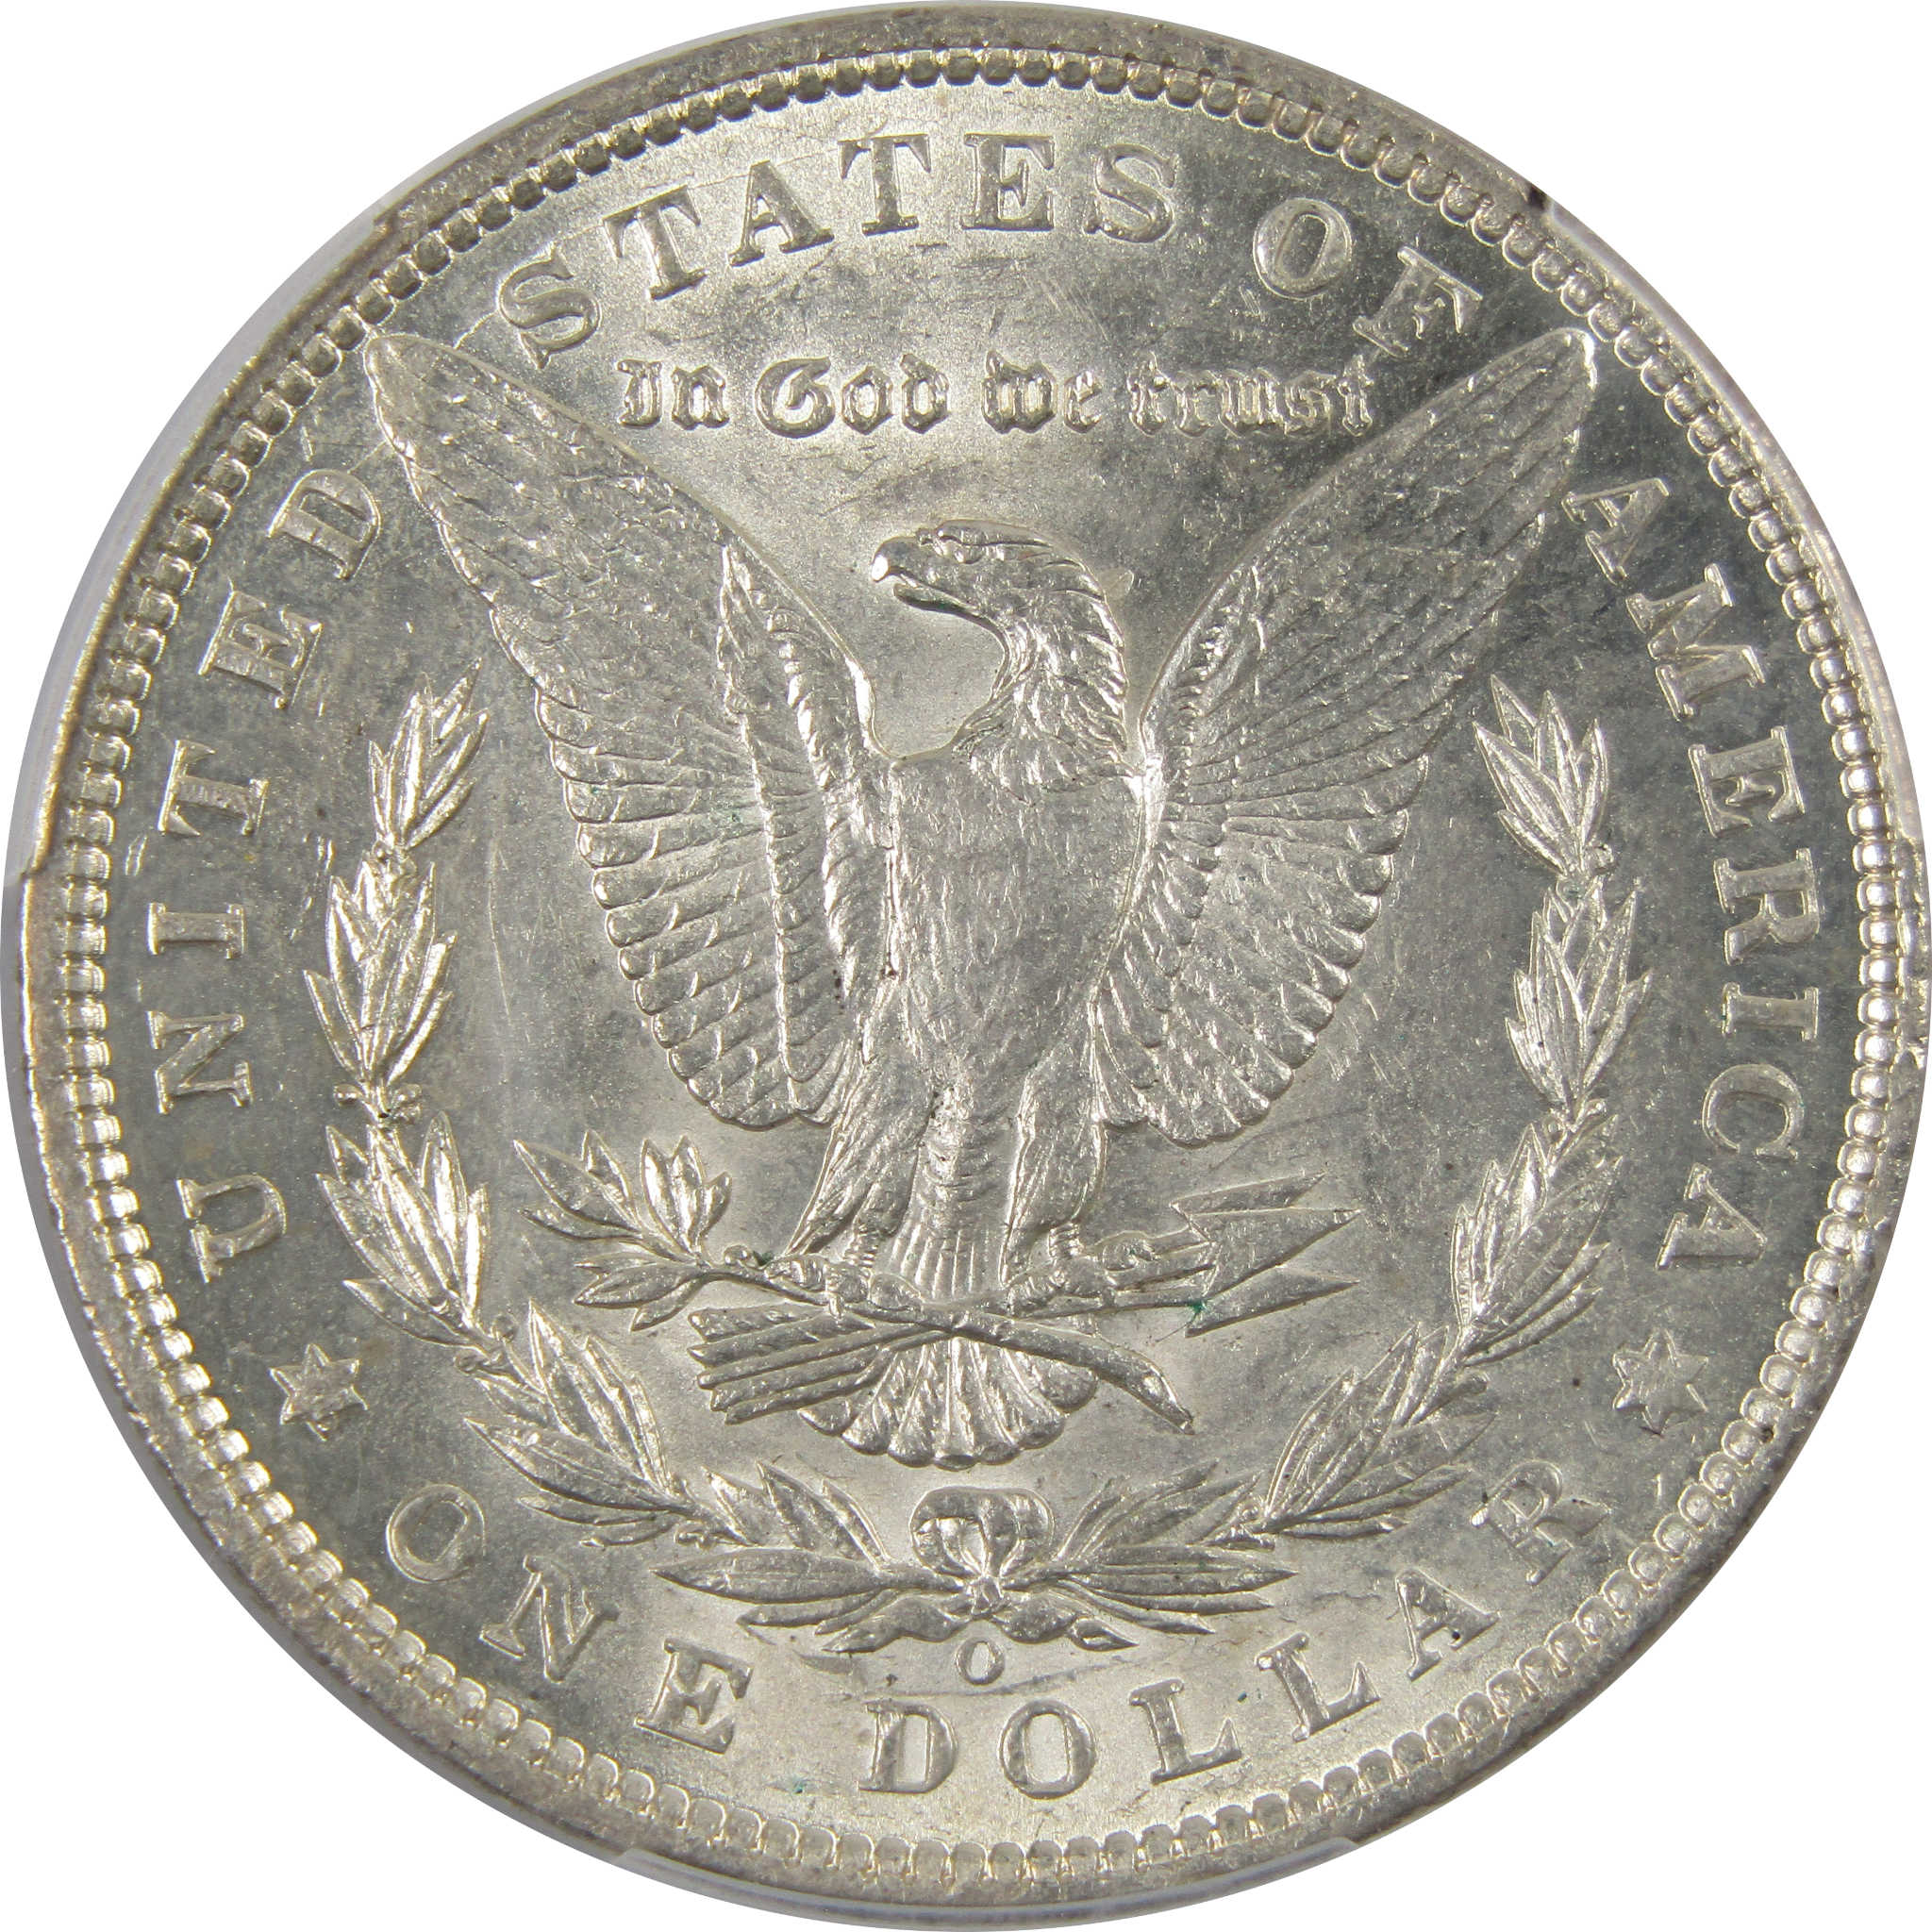 1897 O Morgan Dollar AU 58 PCGS 90% Silver $1 Coin SKU:I7814 - Morgan coin - Morgan silver dollar - Morgan silver dollar for sale - Profile Coins &amp; Collectibles